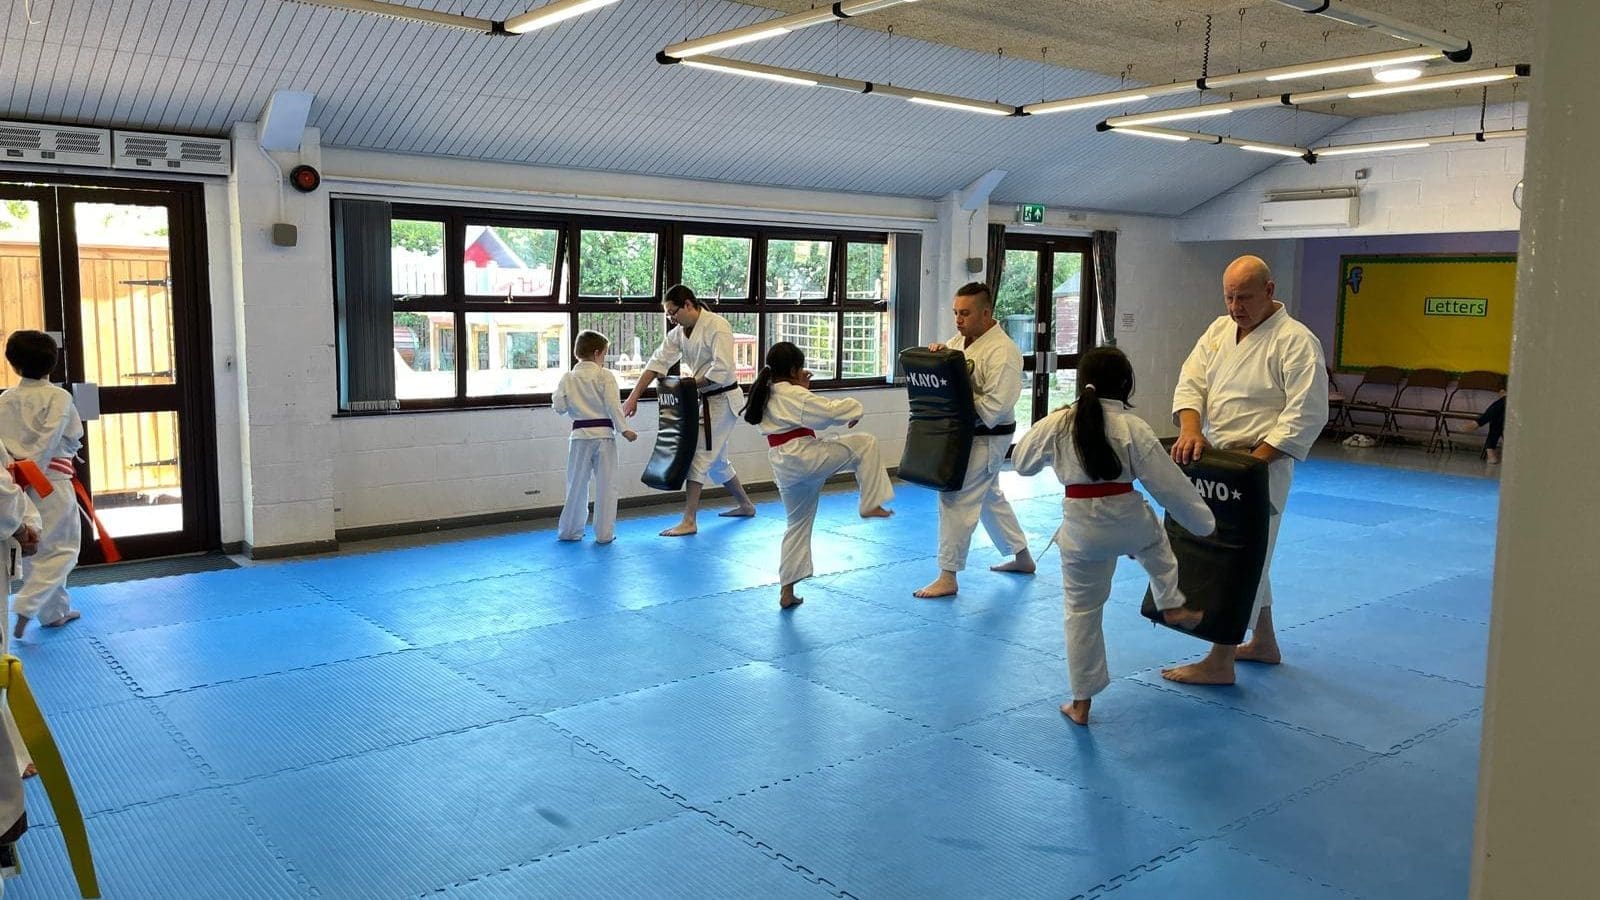 Practicing kicks in the children's karate class